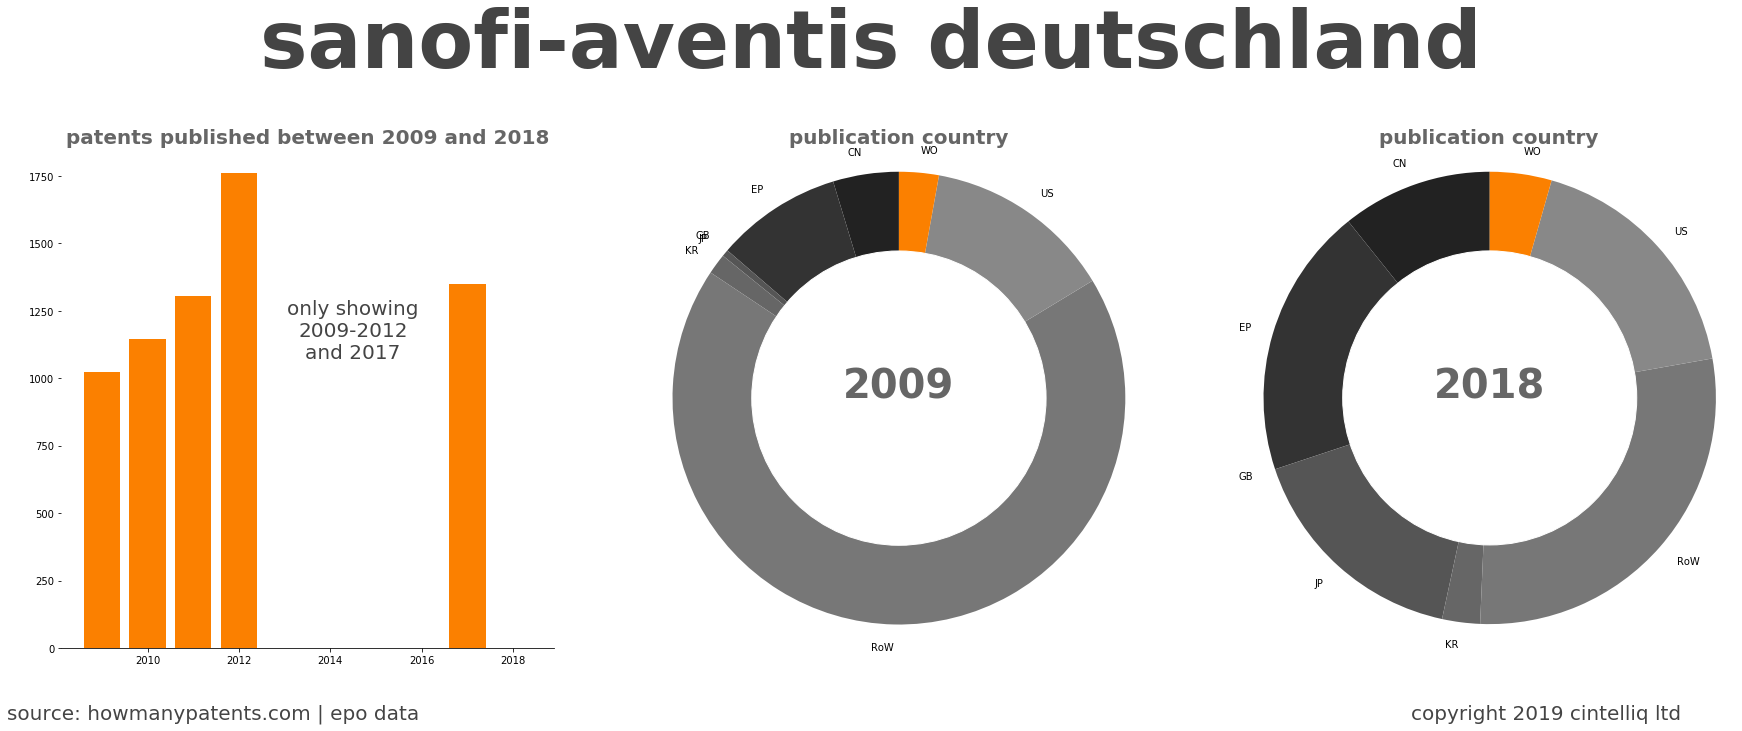 summary of patents for Sanofi-Aventis Deutschland